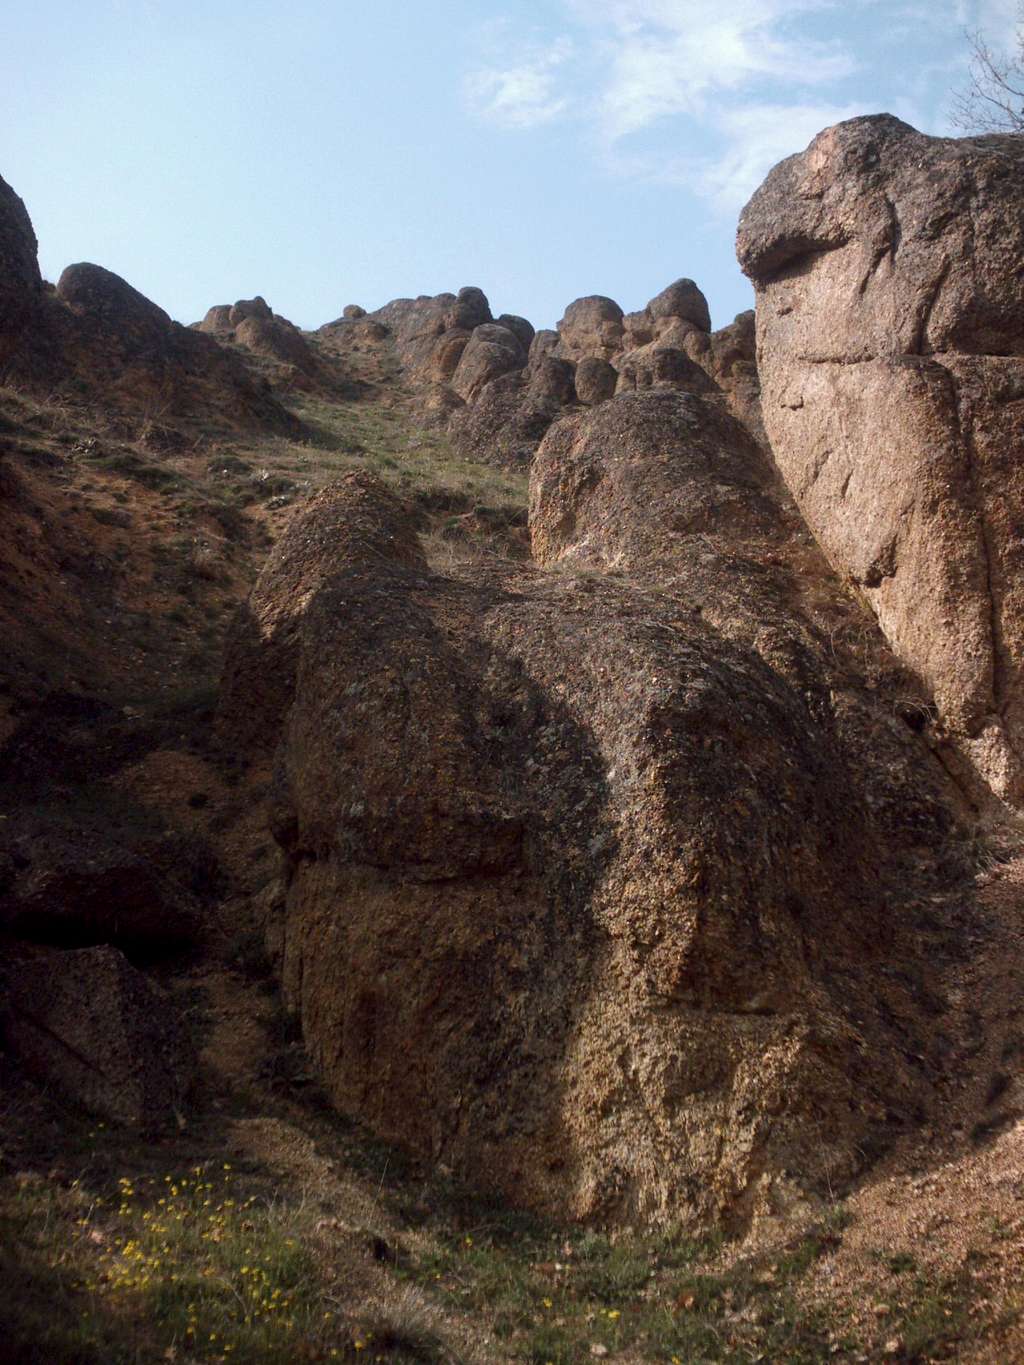 Rocky formations near the village Budimirci